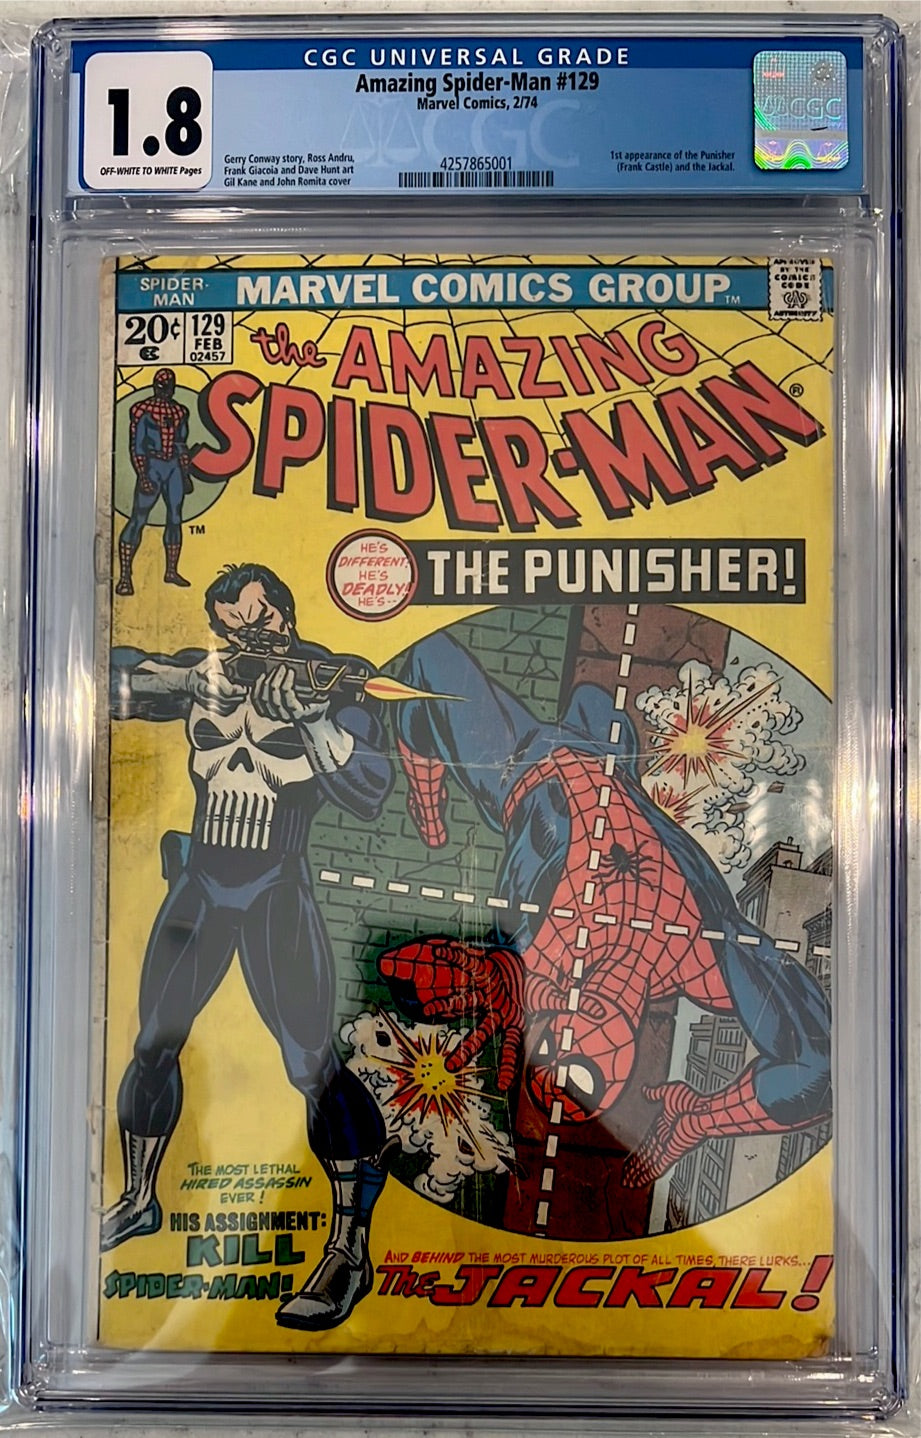 Amazing Spider-Man #129 CGC 1.8 (1st app of The Punisher)